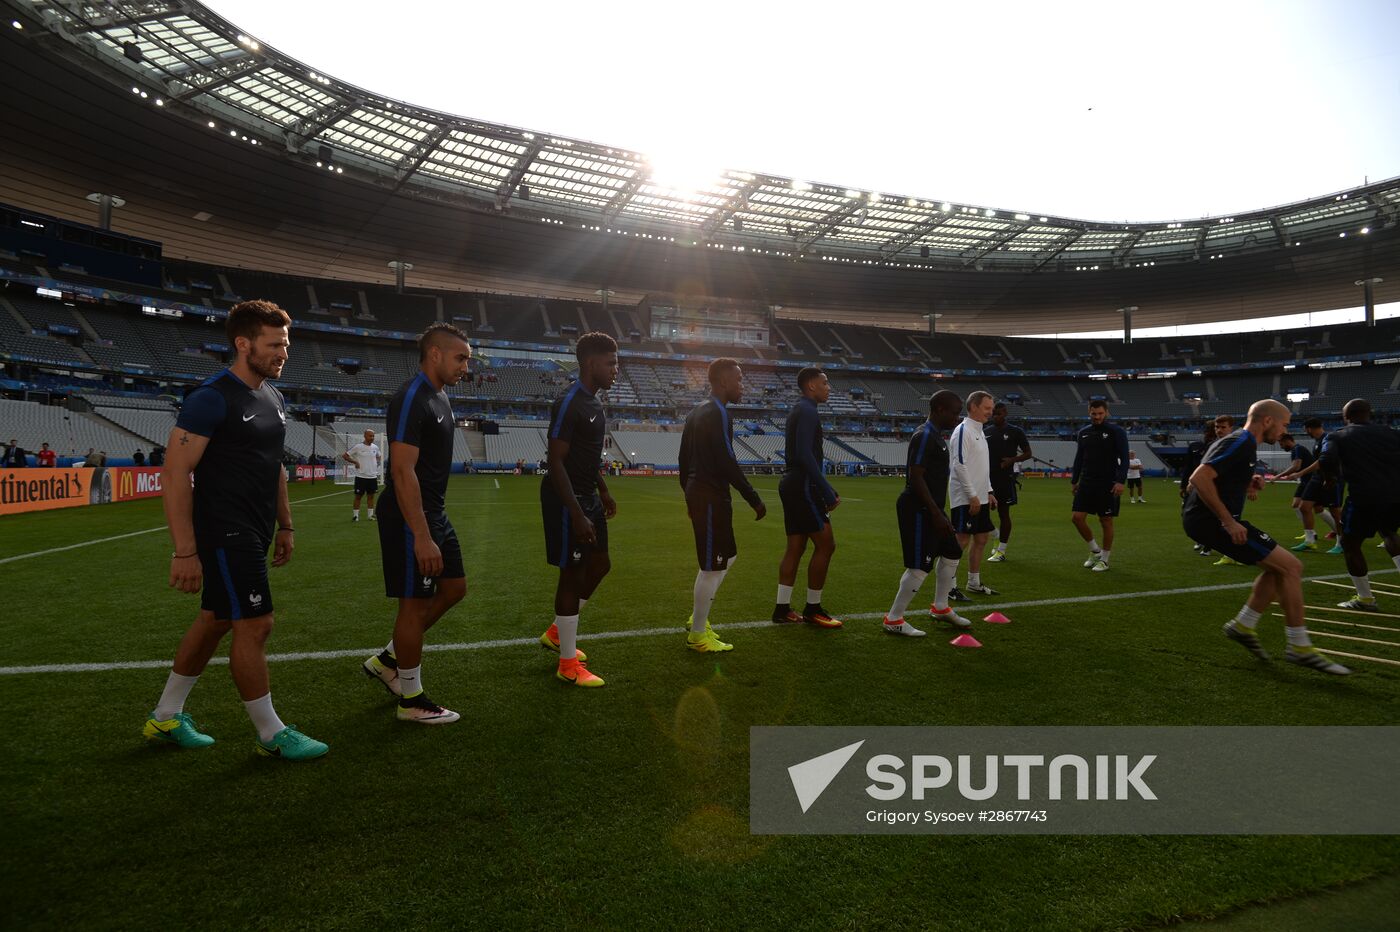 UEFA Euro 2016. French national team holds training session